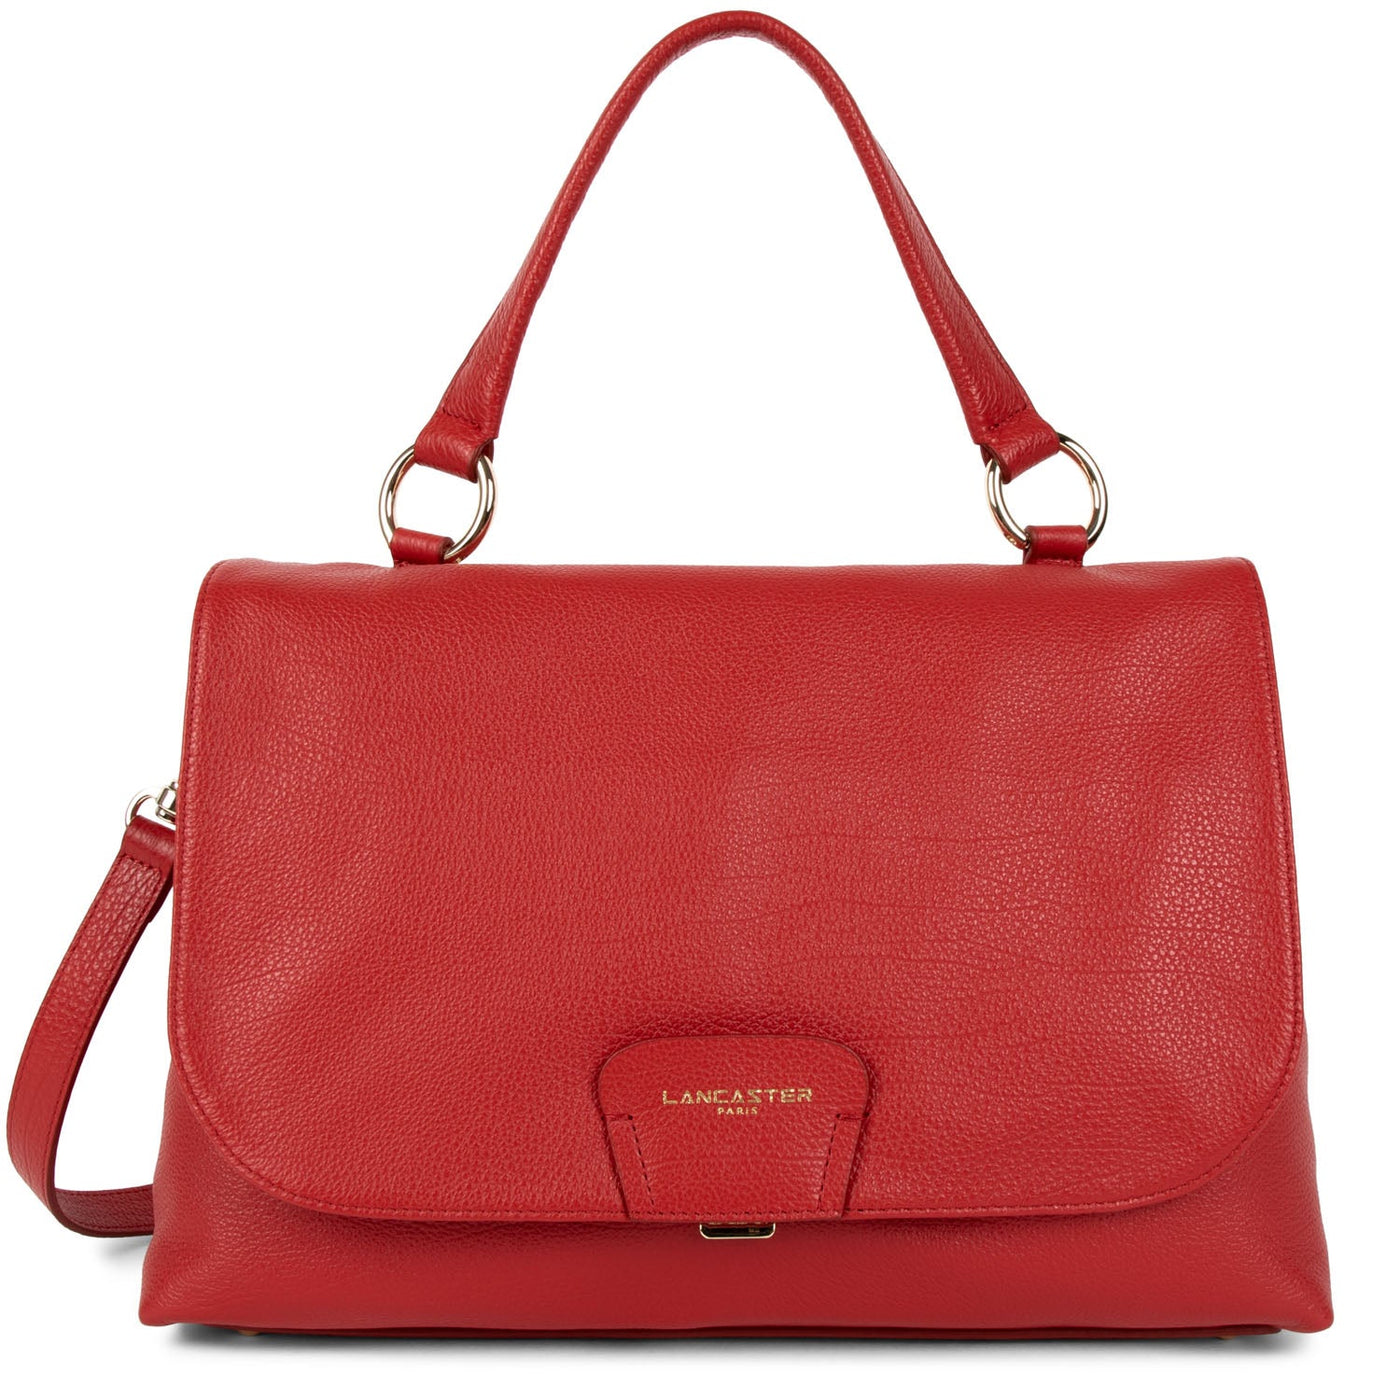 handbag - dune #couleur_rouge